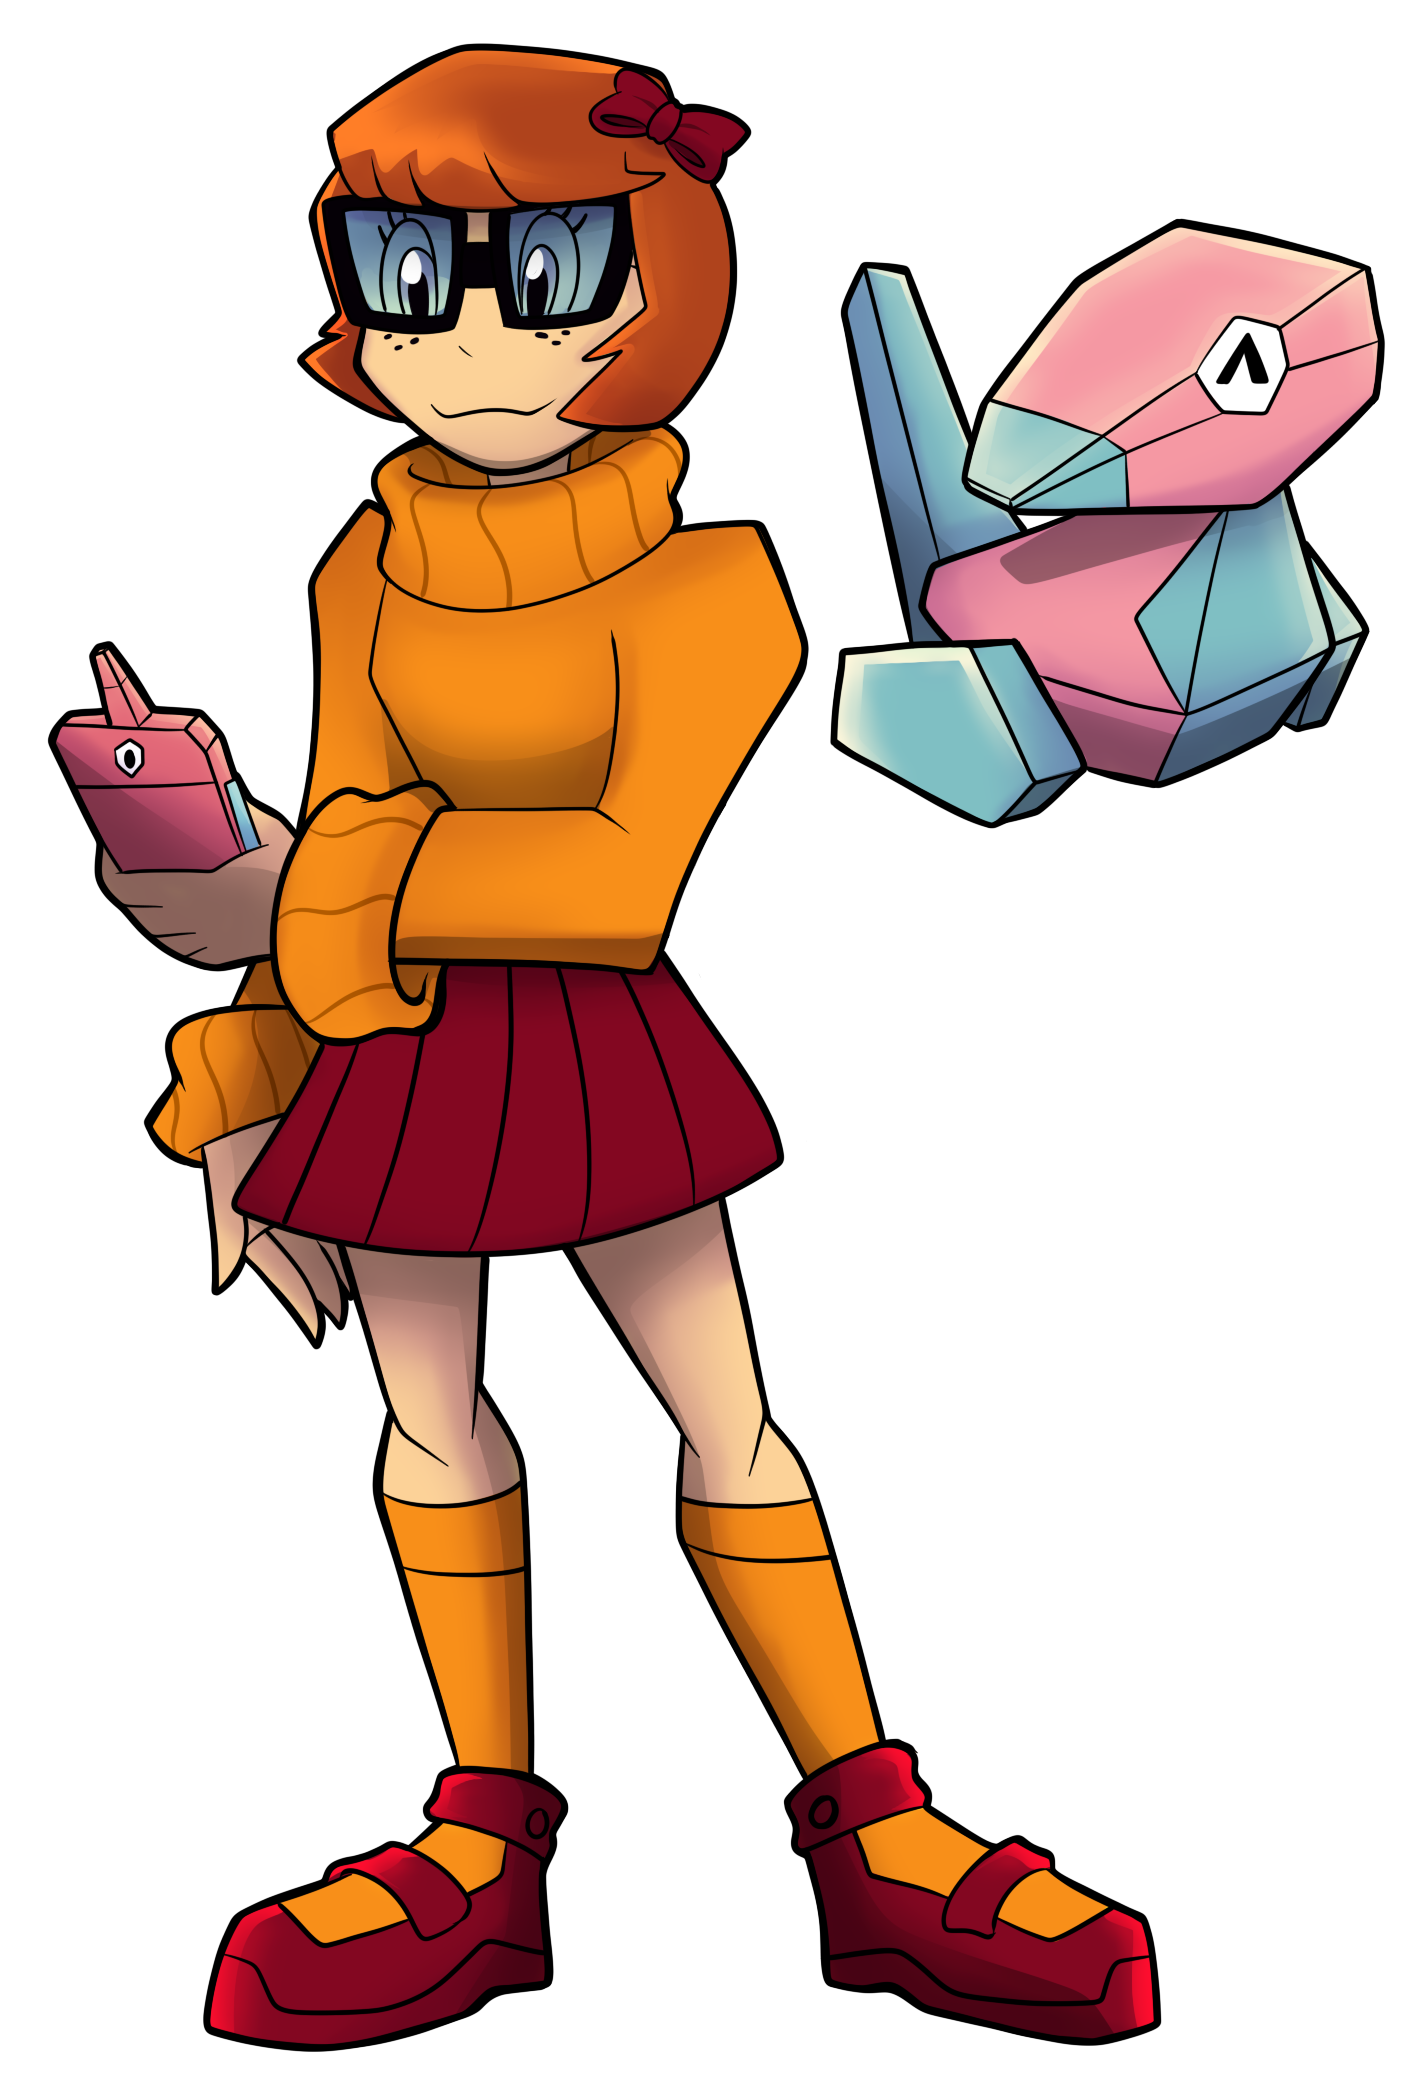 Pokemon Trainer Velma Dinkley